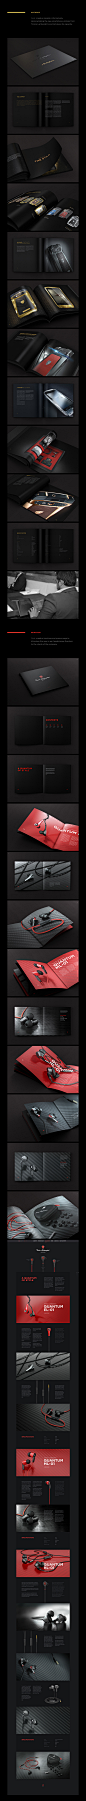 Brochures for Tonino Lamborghini Mobile by sarah - UE设计平台-网页设计，设计交流，界面设计，酷站欣赏